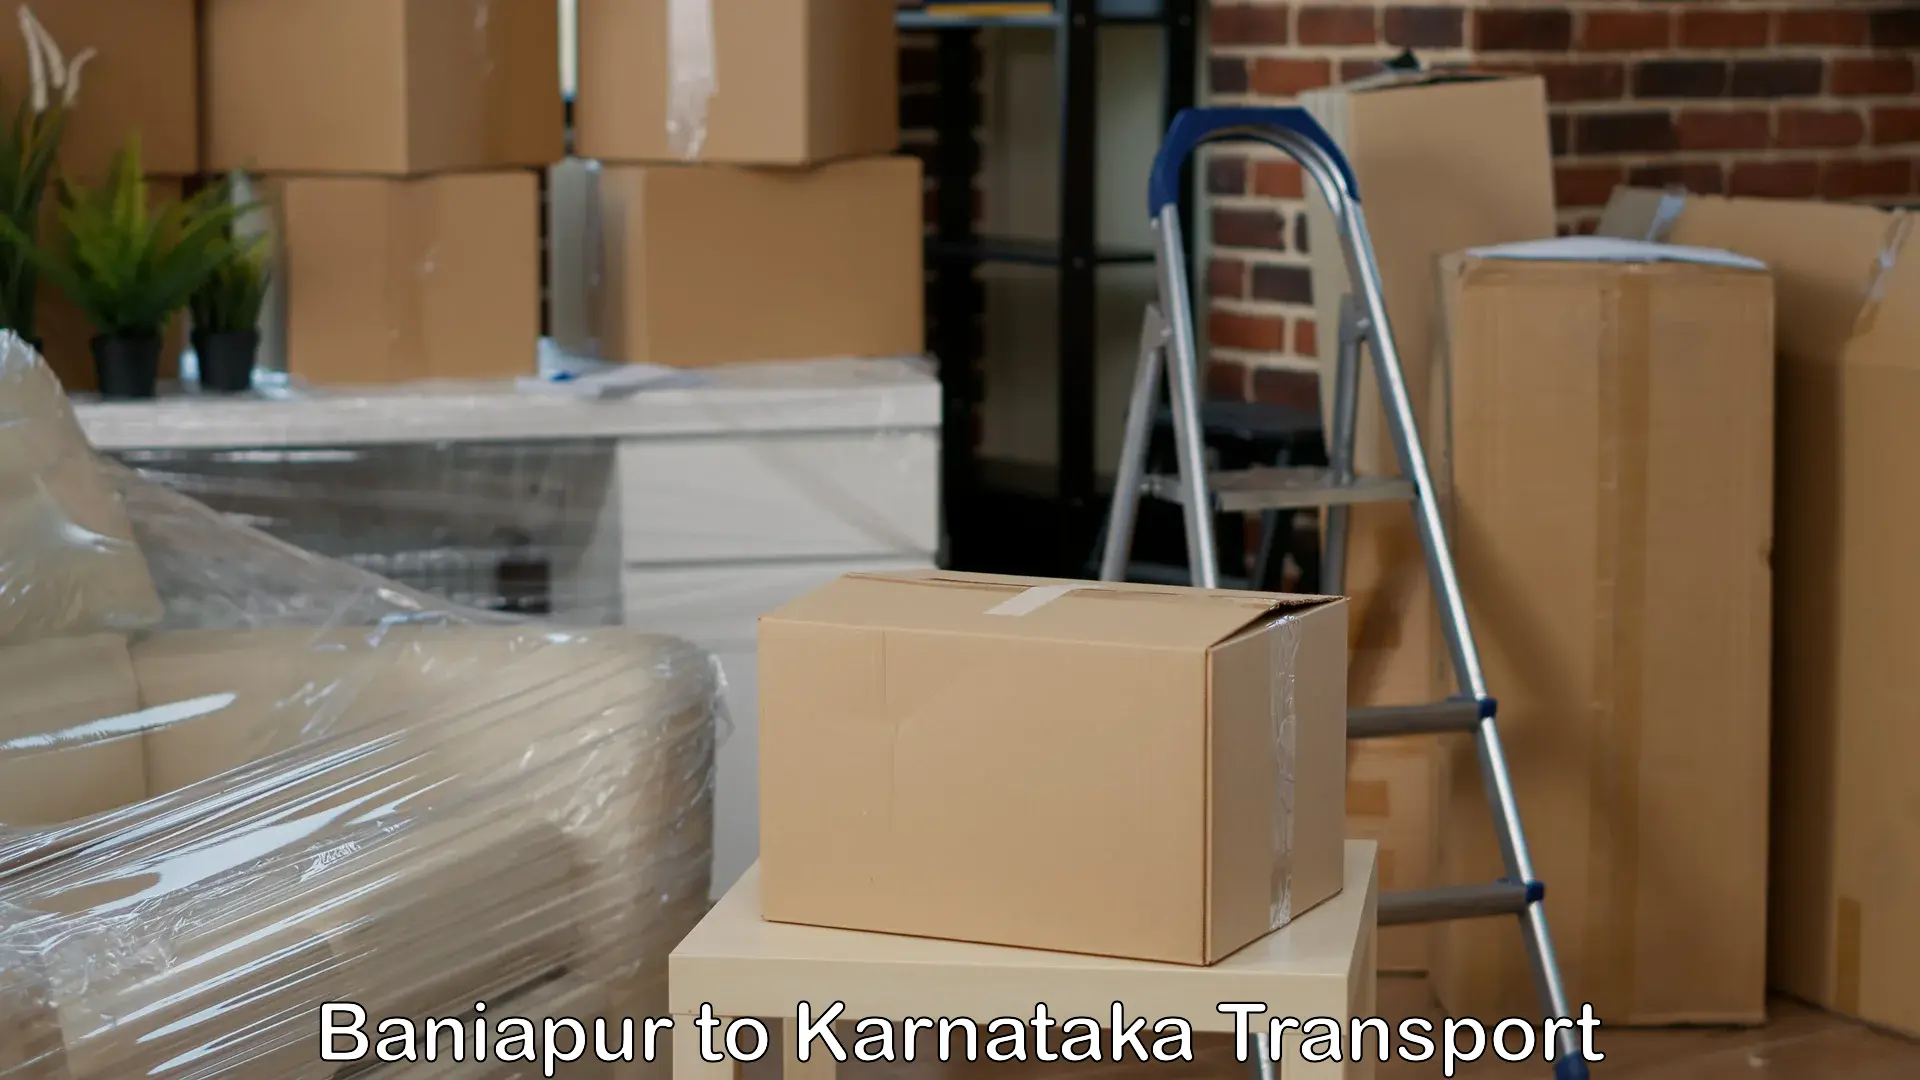 Truck transport companies in India Baniapur to Hubli